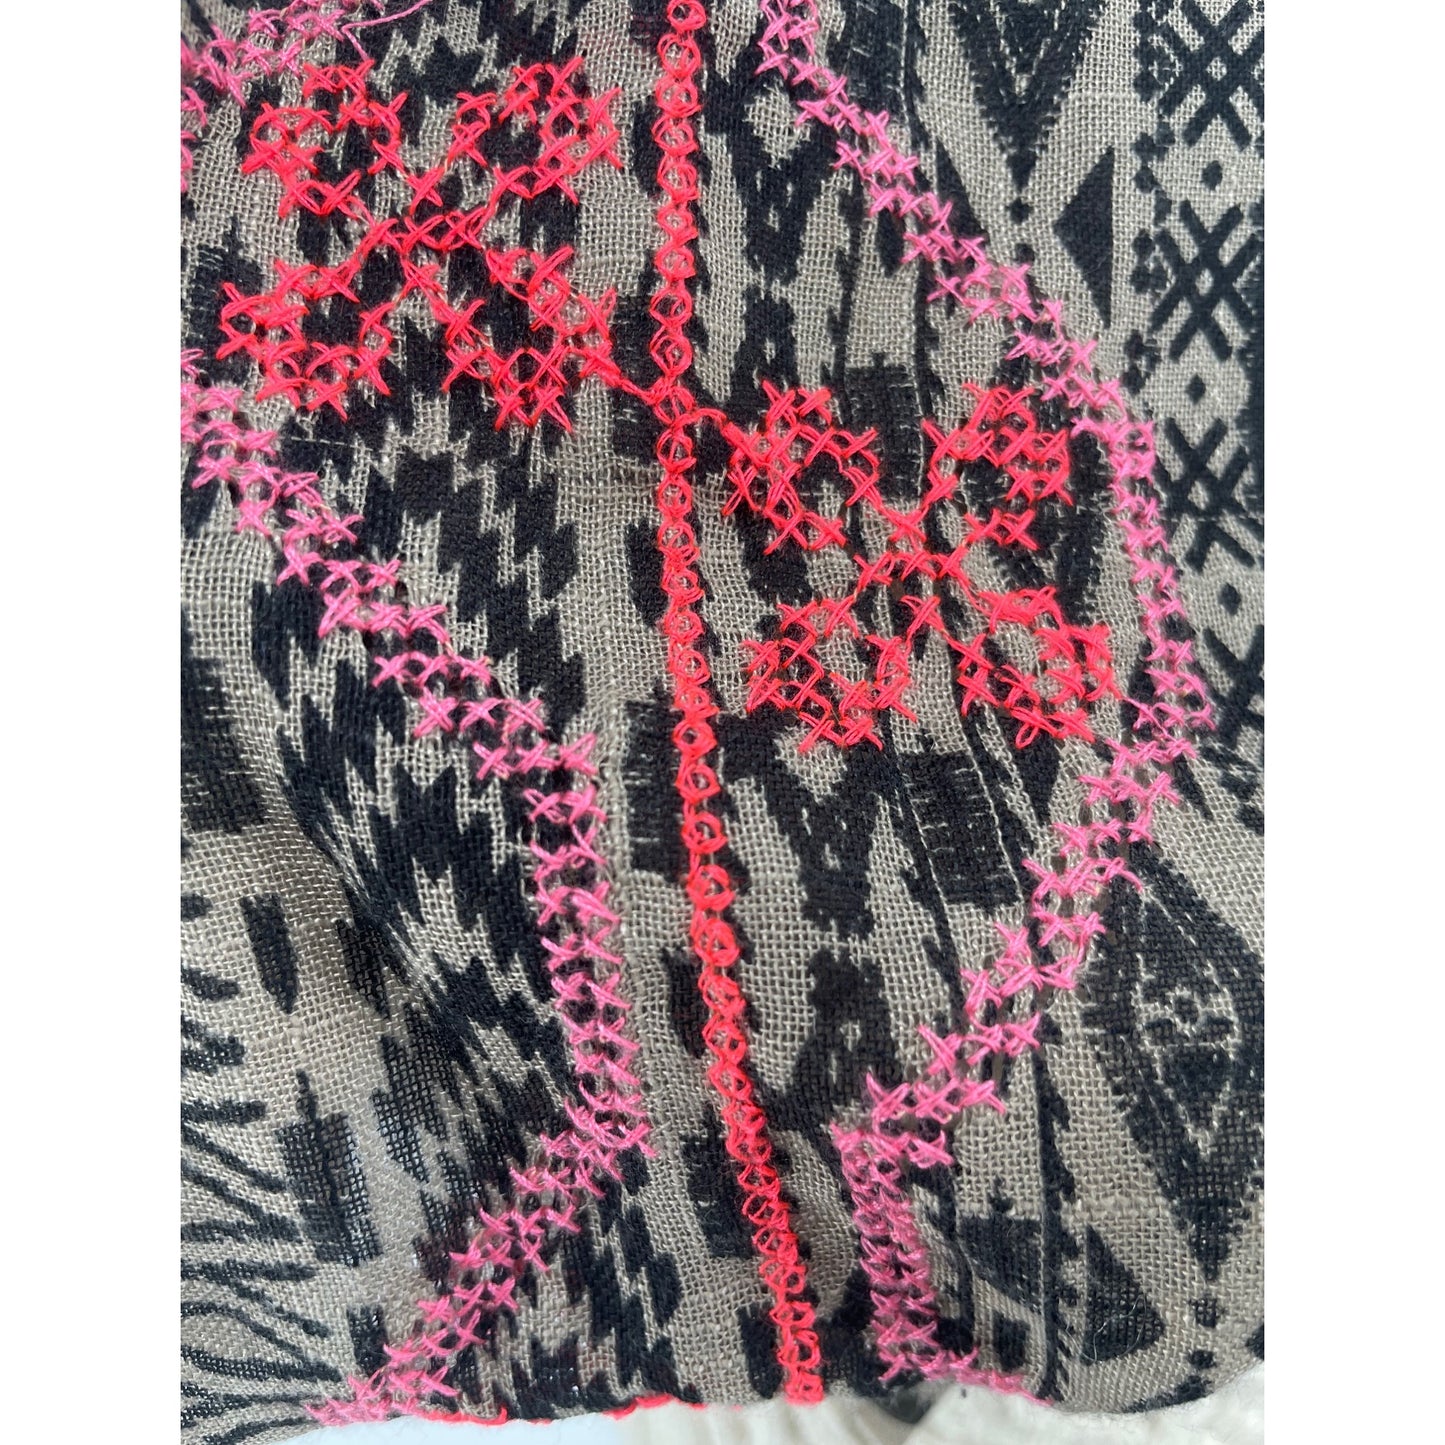 NWOT Target Women's Brown, Pink & Black Embroidered Tribal Print Infinity Scarf W/ Fringe Hem